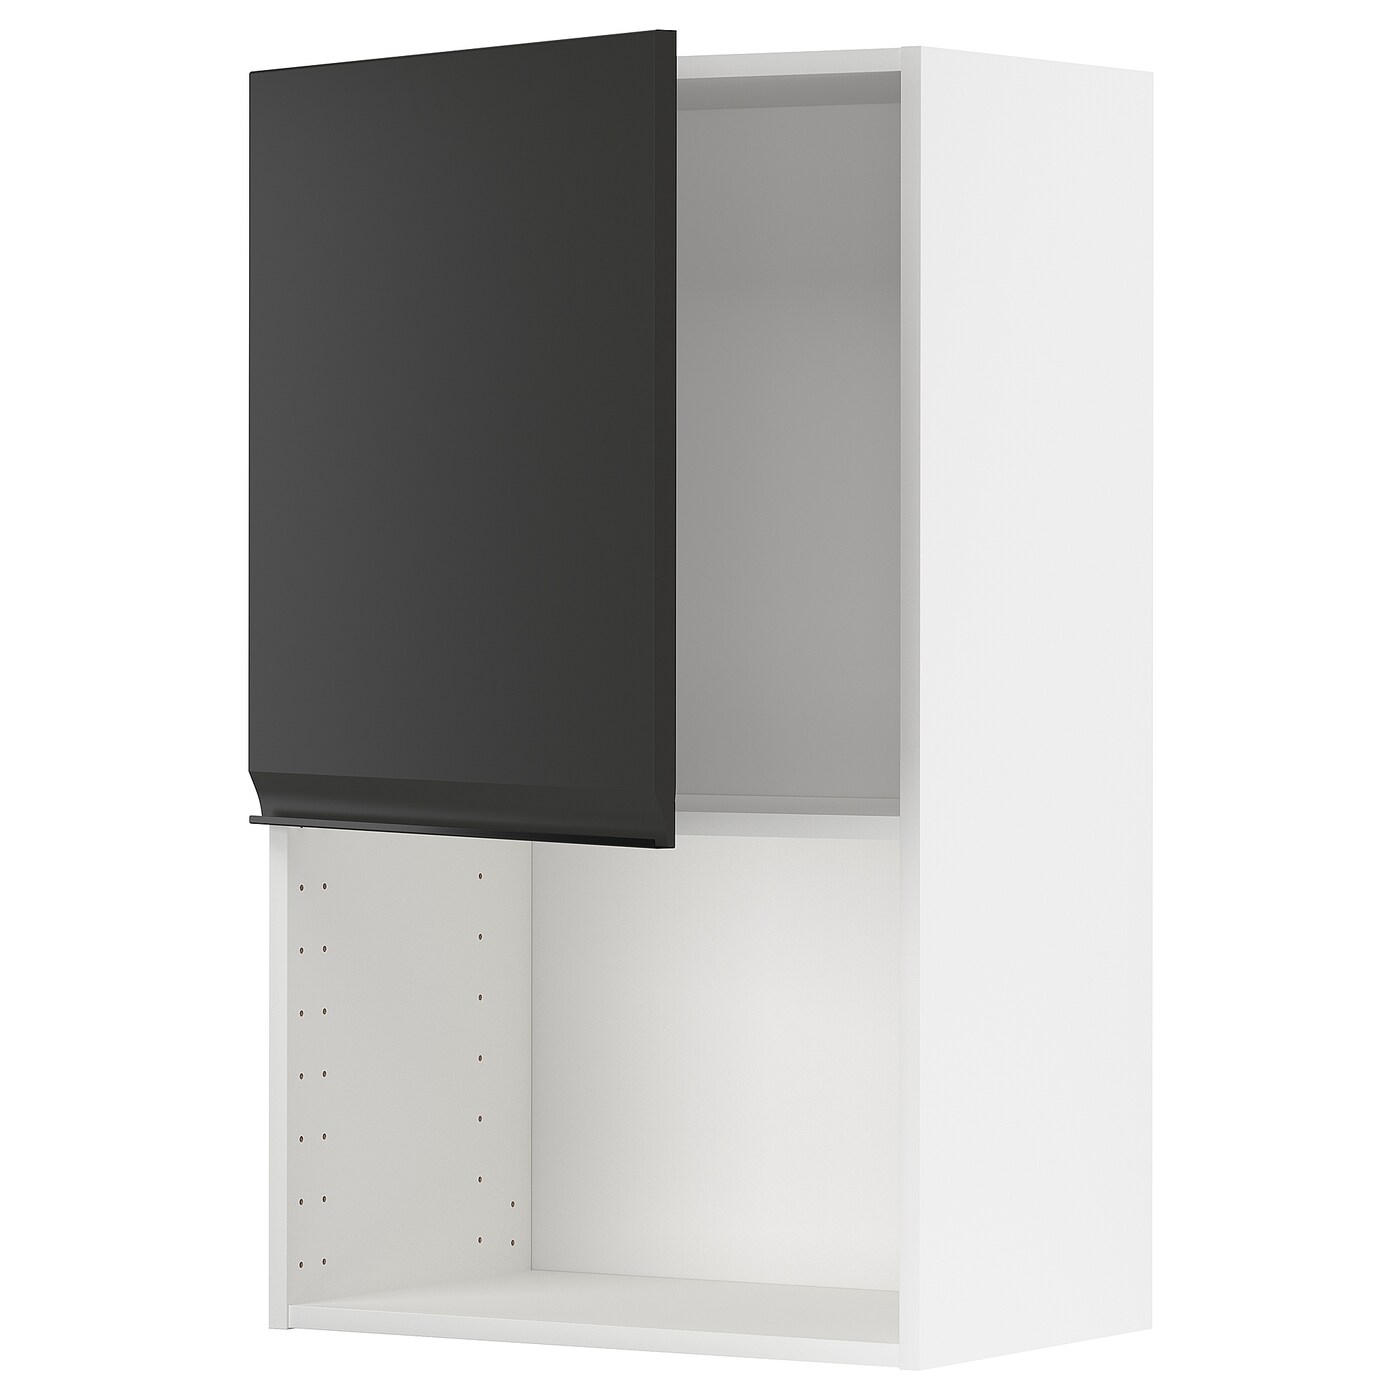 METOD Навесной шкаф - METOD IKEA/ МЕТОД ИКЕА, 100х60 см, белый/черный